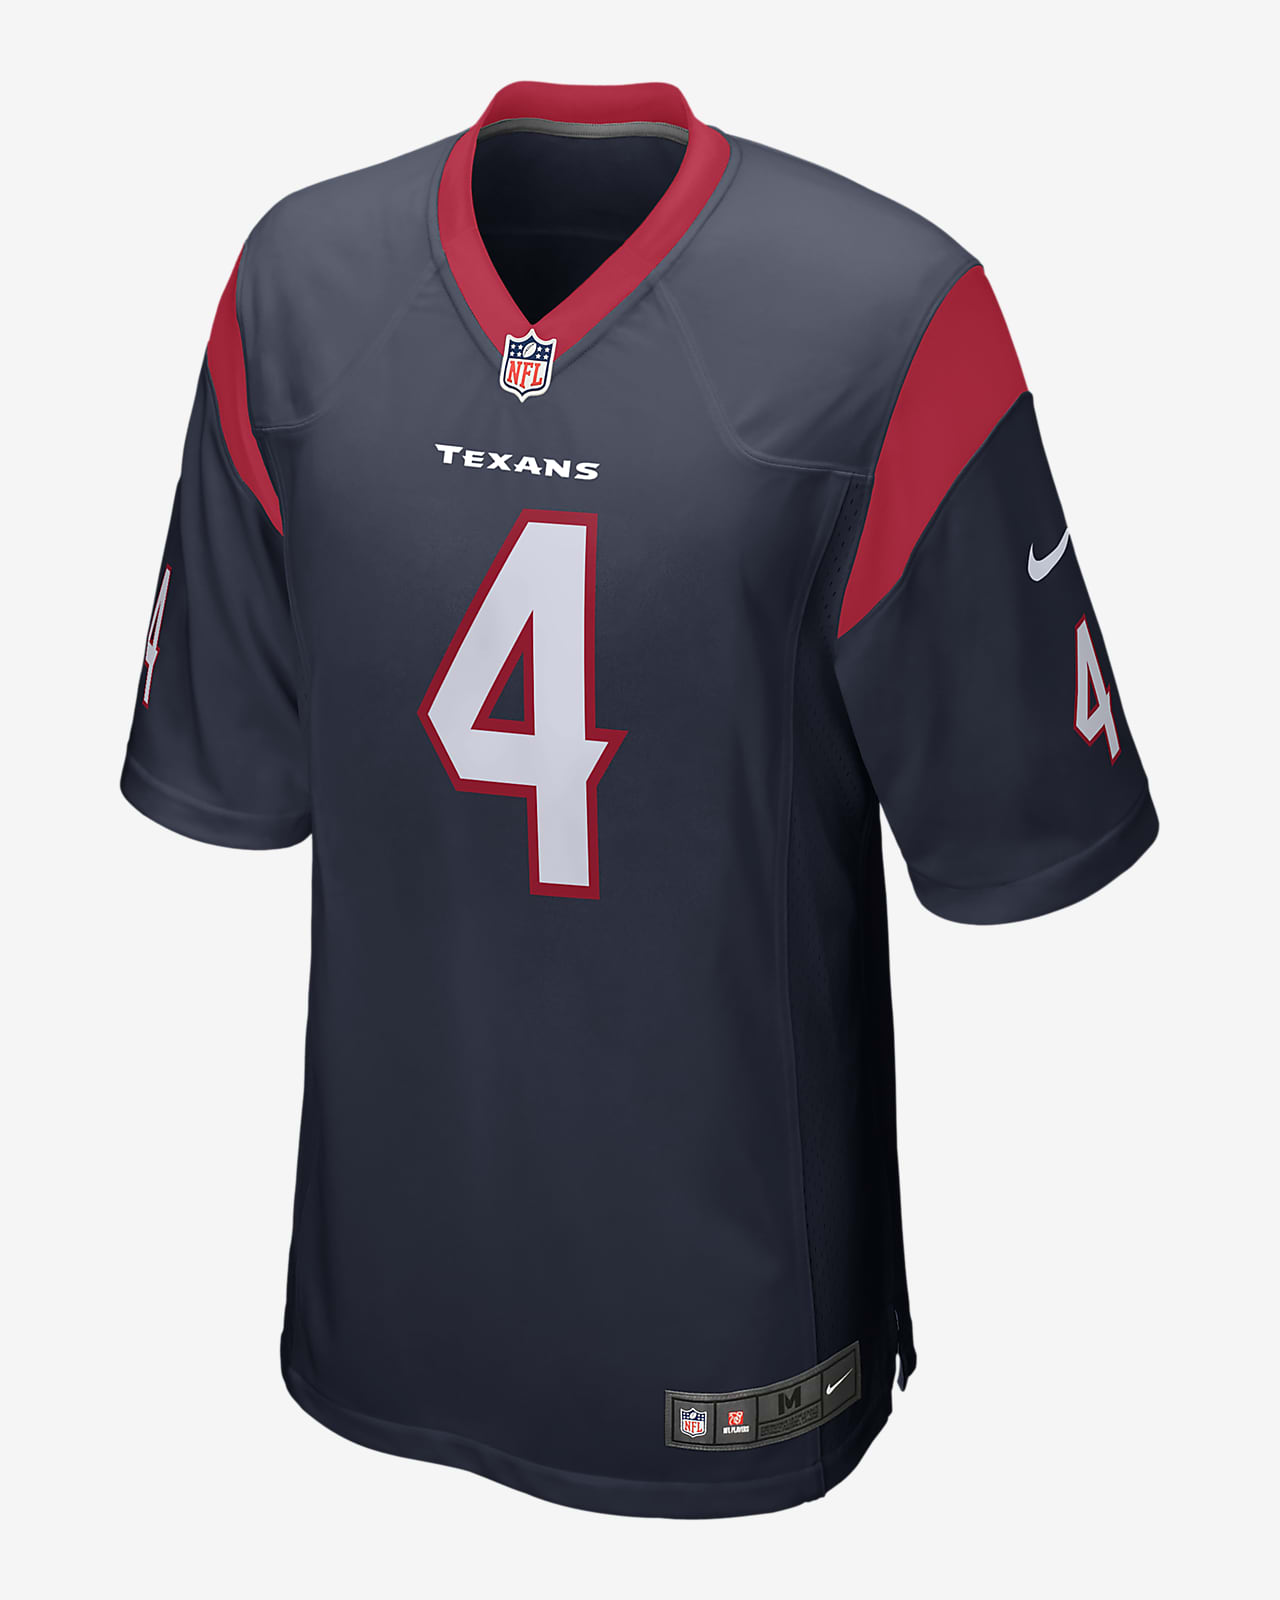 NFL Houston Texans (Deshaun Watson) American-Football-Spieltrikot für Herren